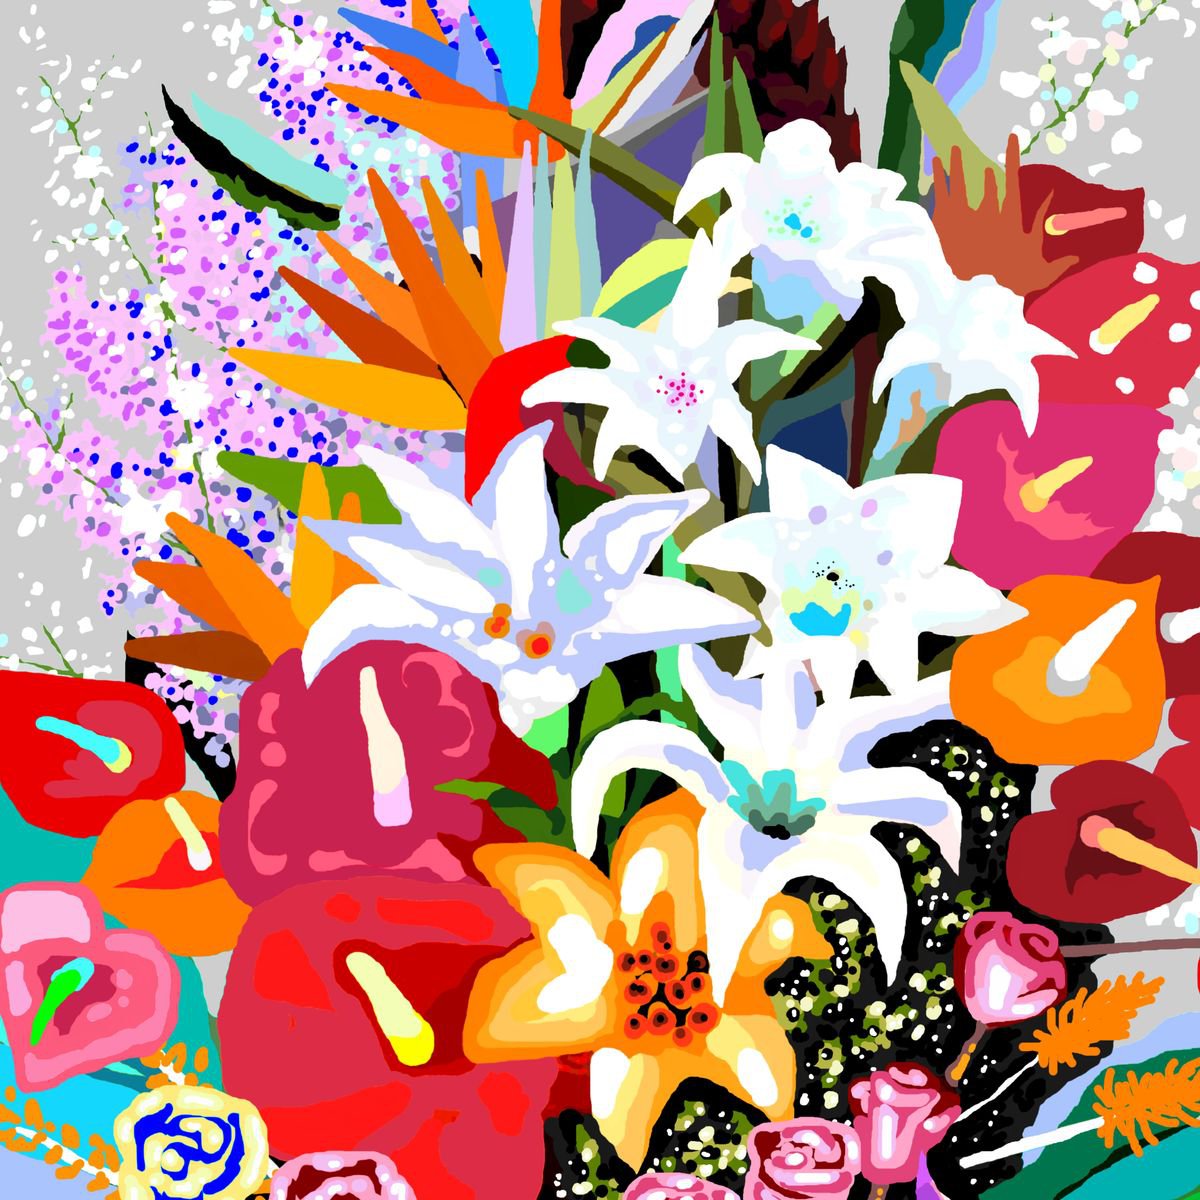 Flowers III-B/ Flores III-B (pop art, floral) by Alejos - Pop Art landscapes